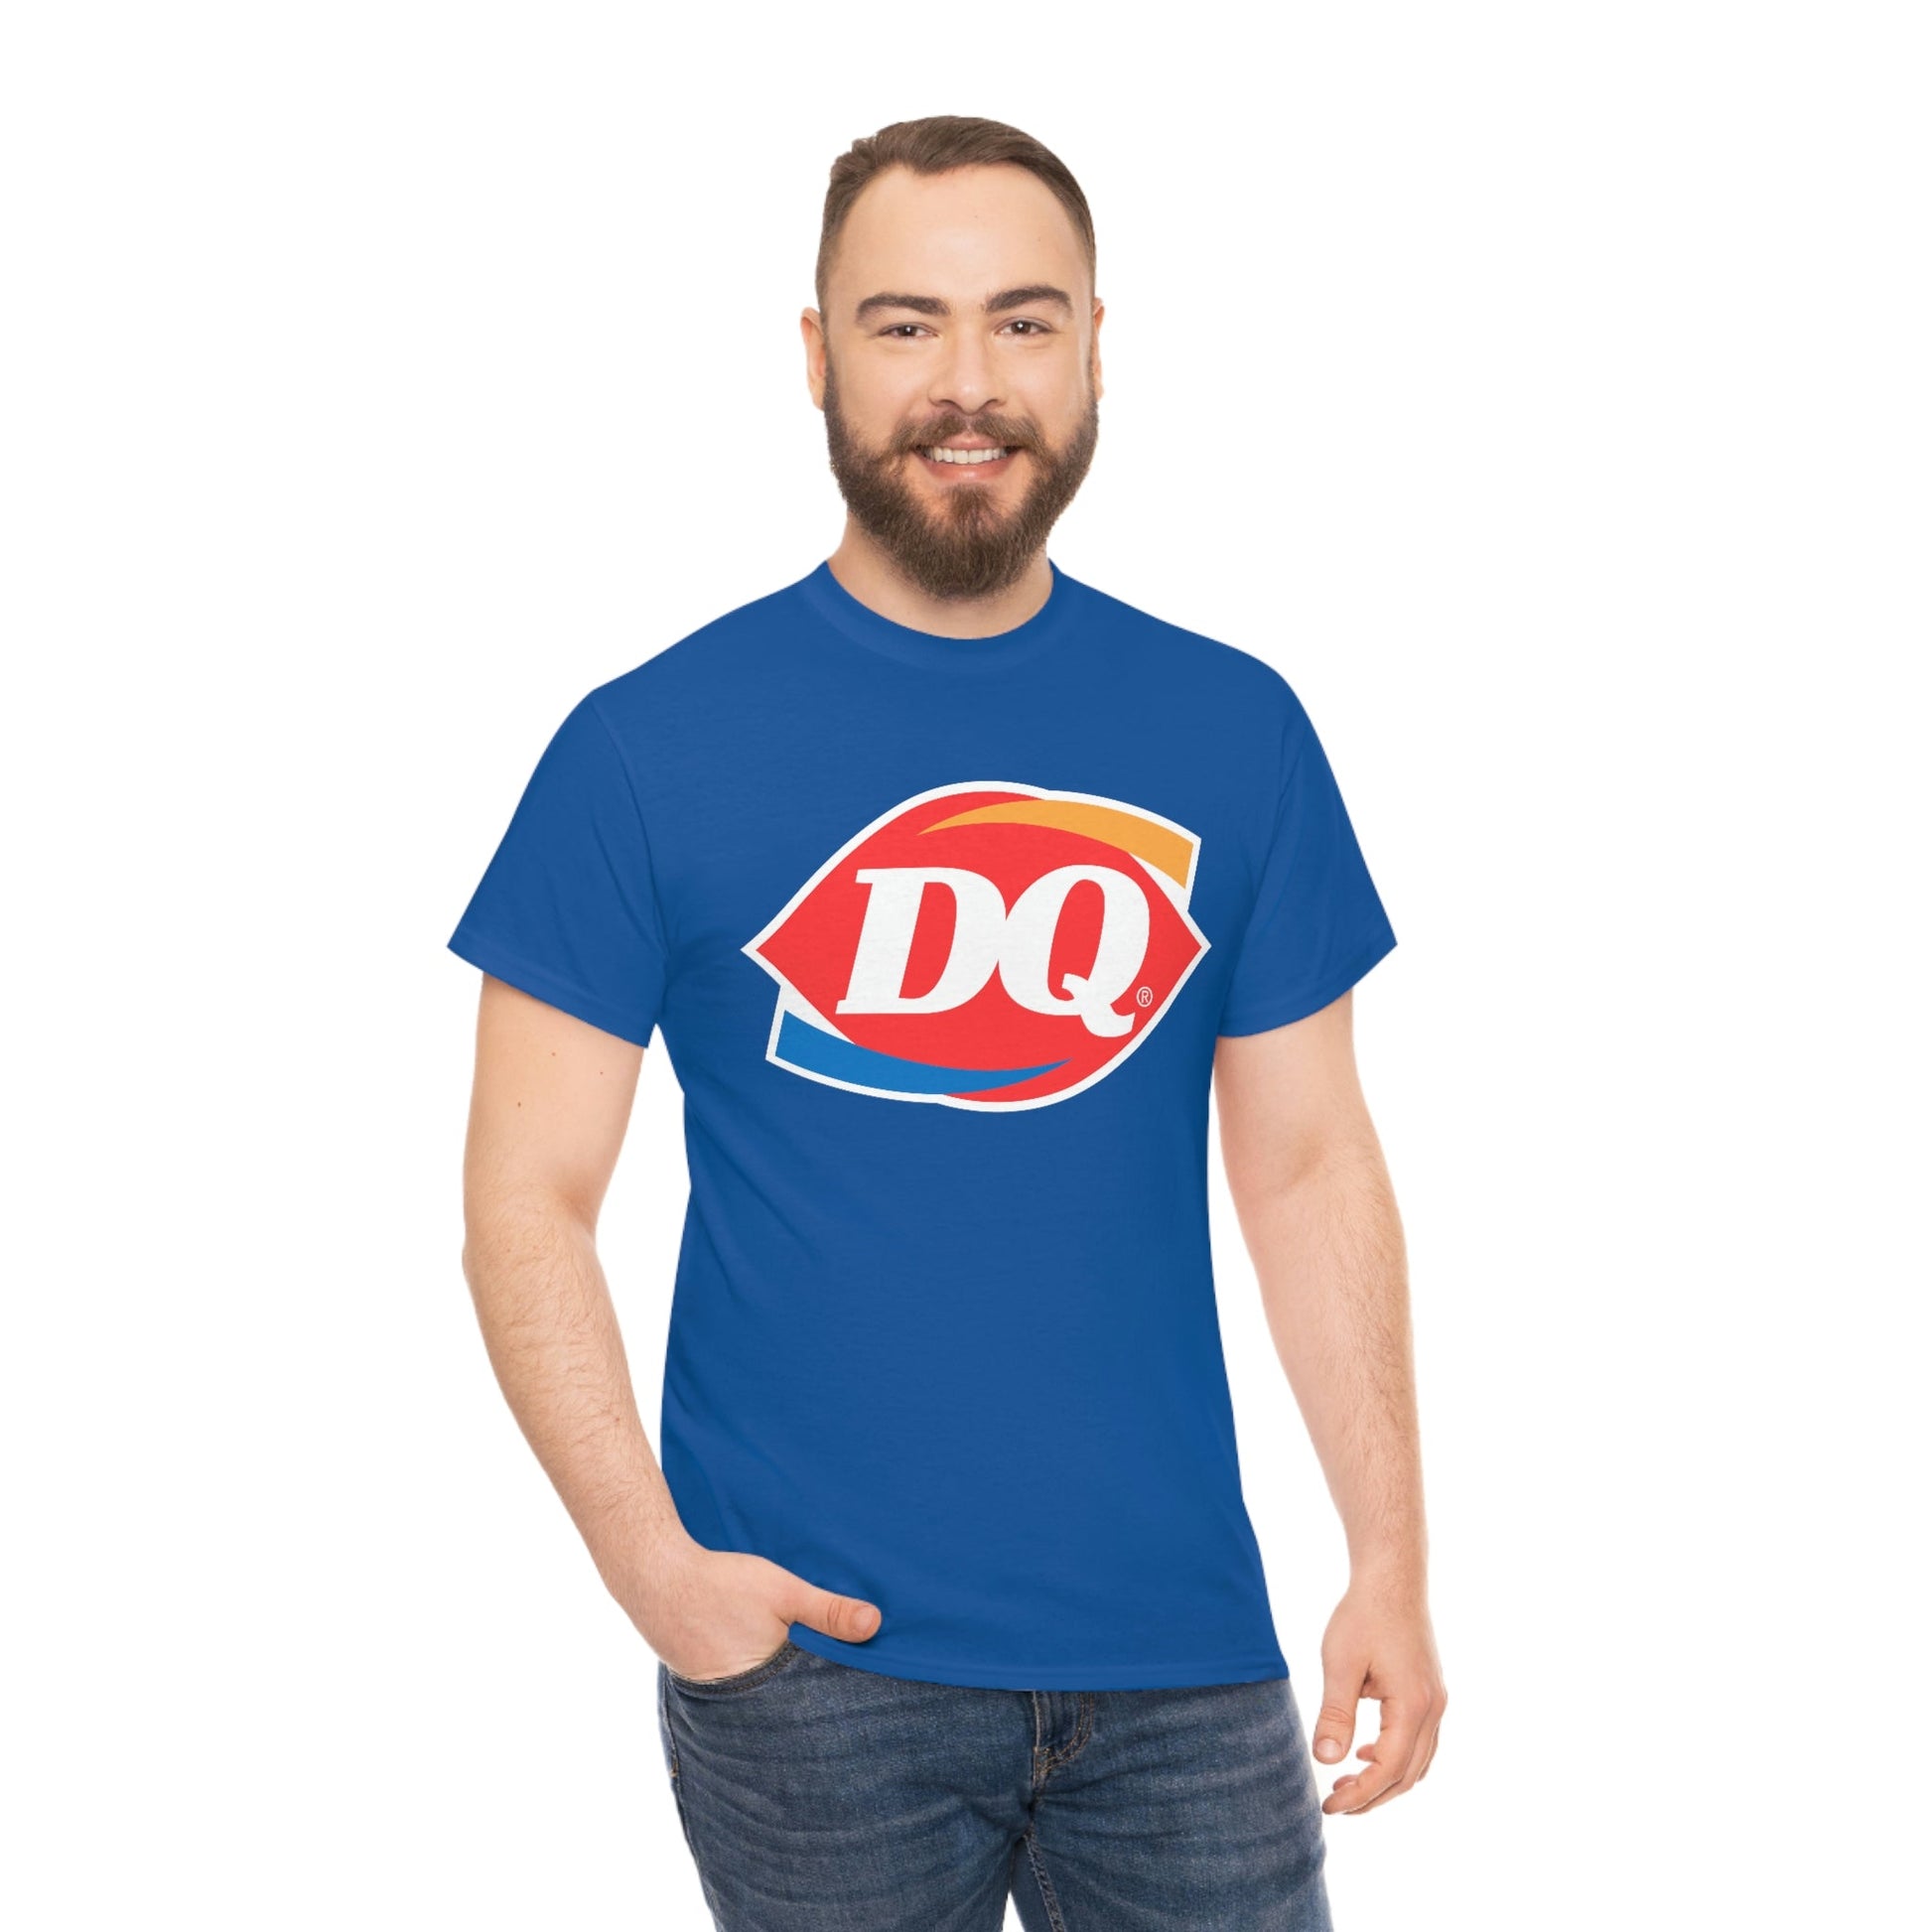 Dairy Queen T-Shirt | DQ Soft Serve Ice Cream Tee - RetroTeeShop